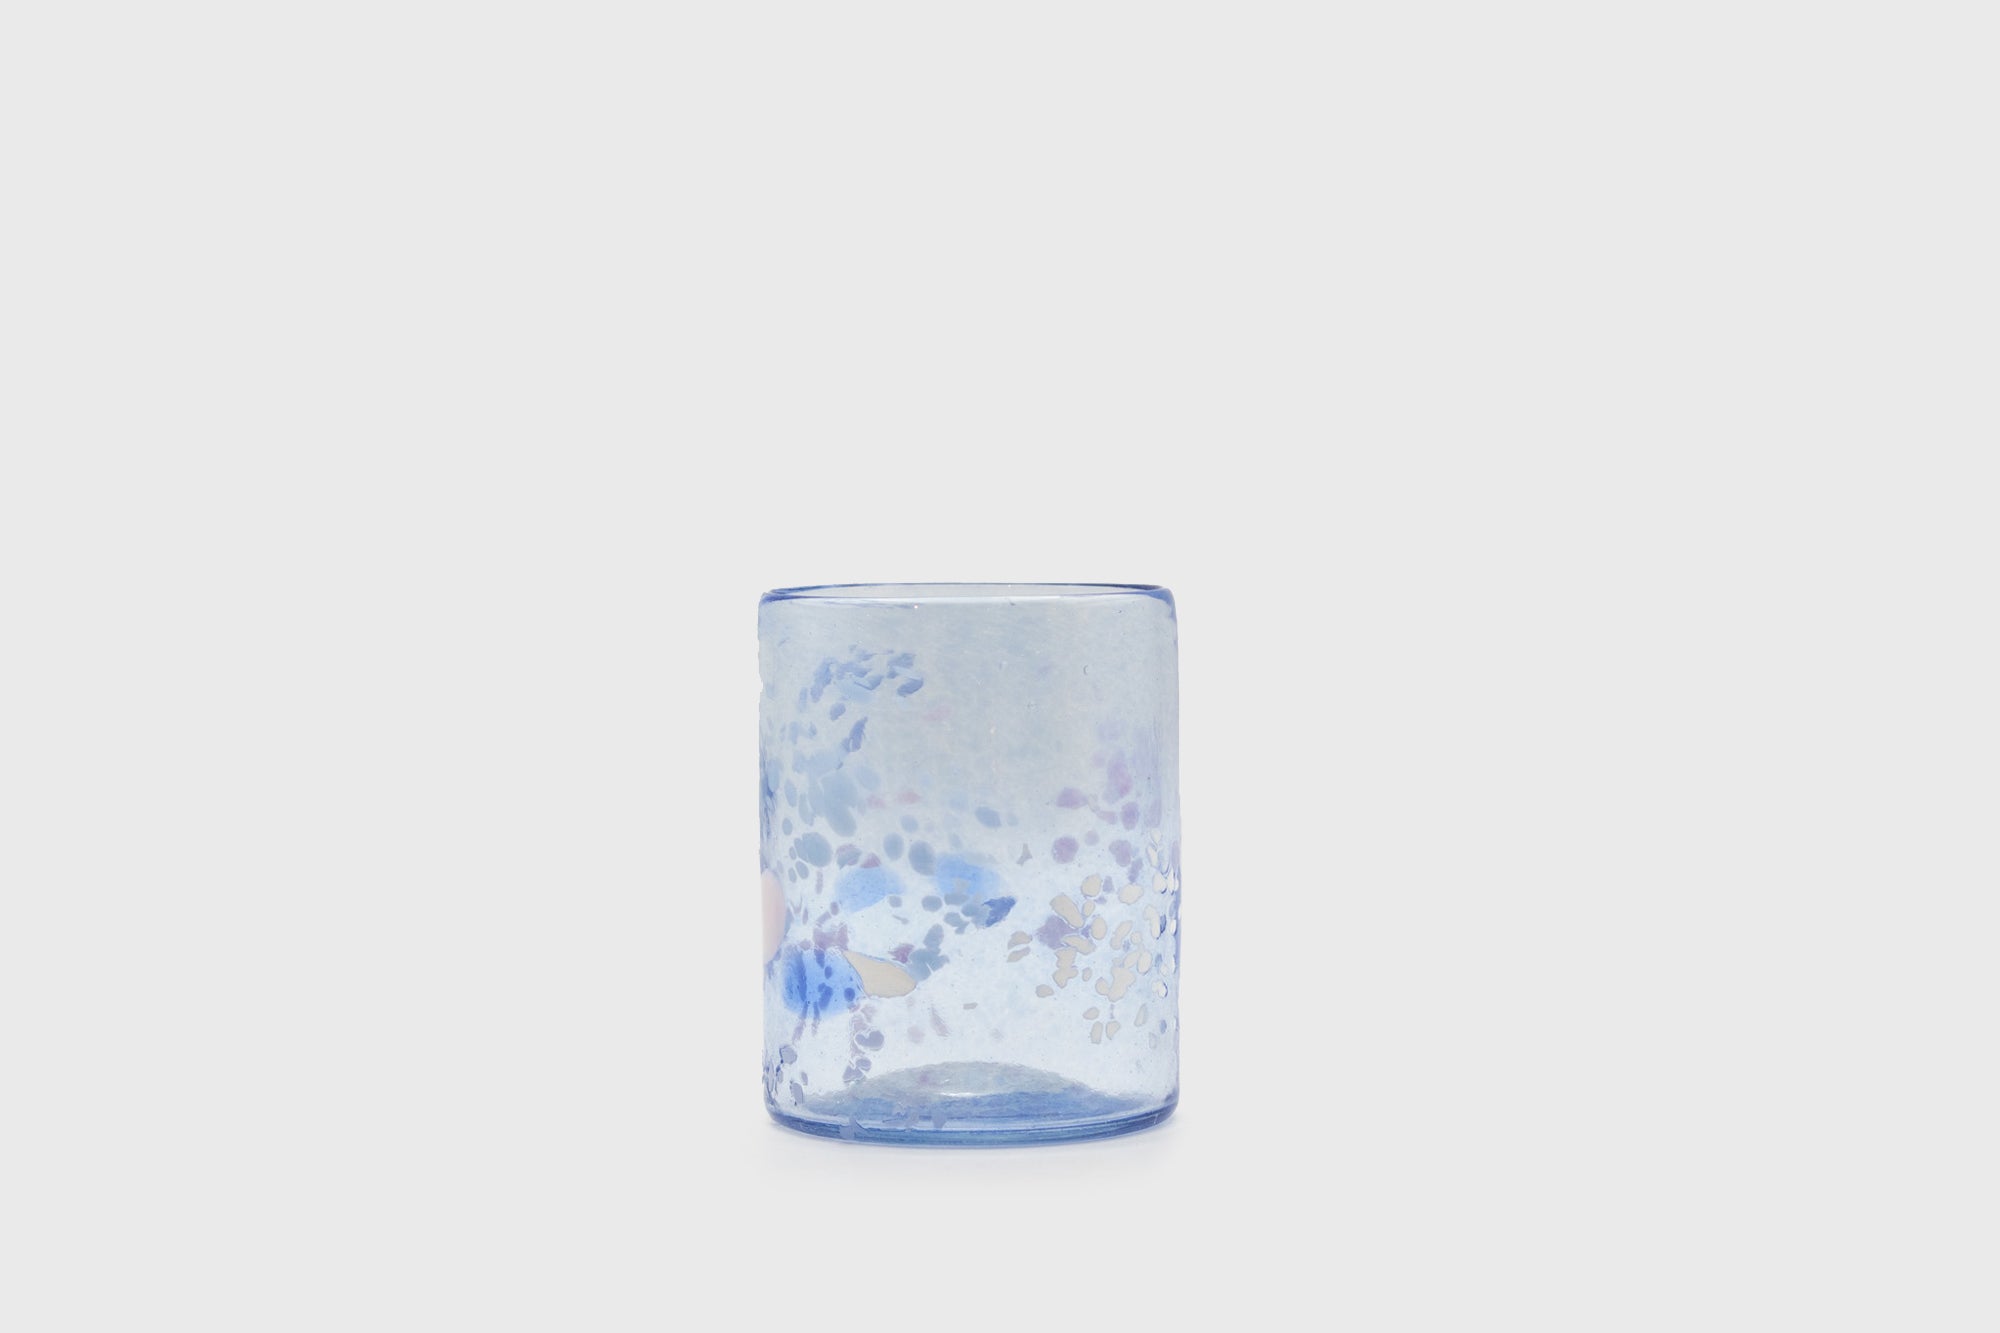 Elf Glass Ceramics & Glassware [Homeware] Studio Arhoj Echo Glass   Deadstock General Store, Manchester